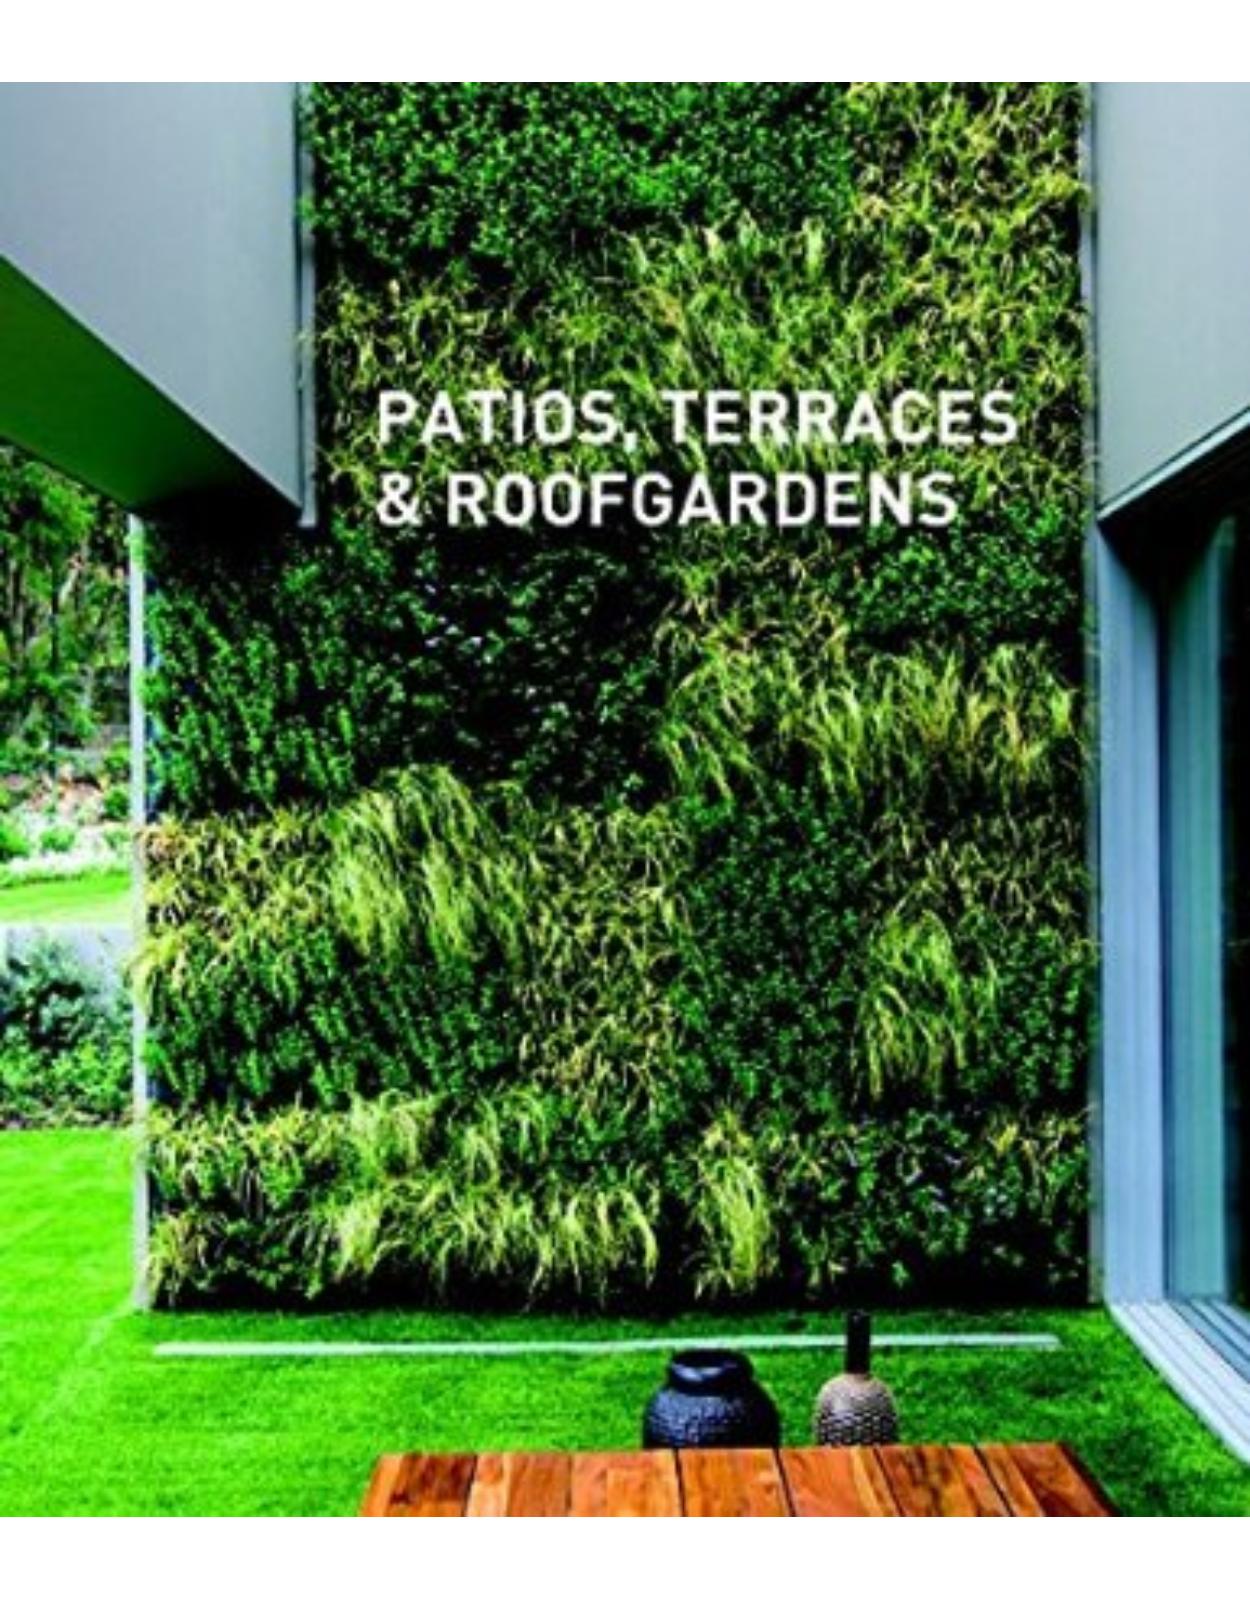 Patios, Terraces & Roofgardens 